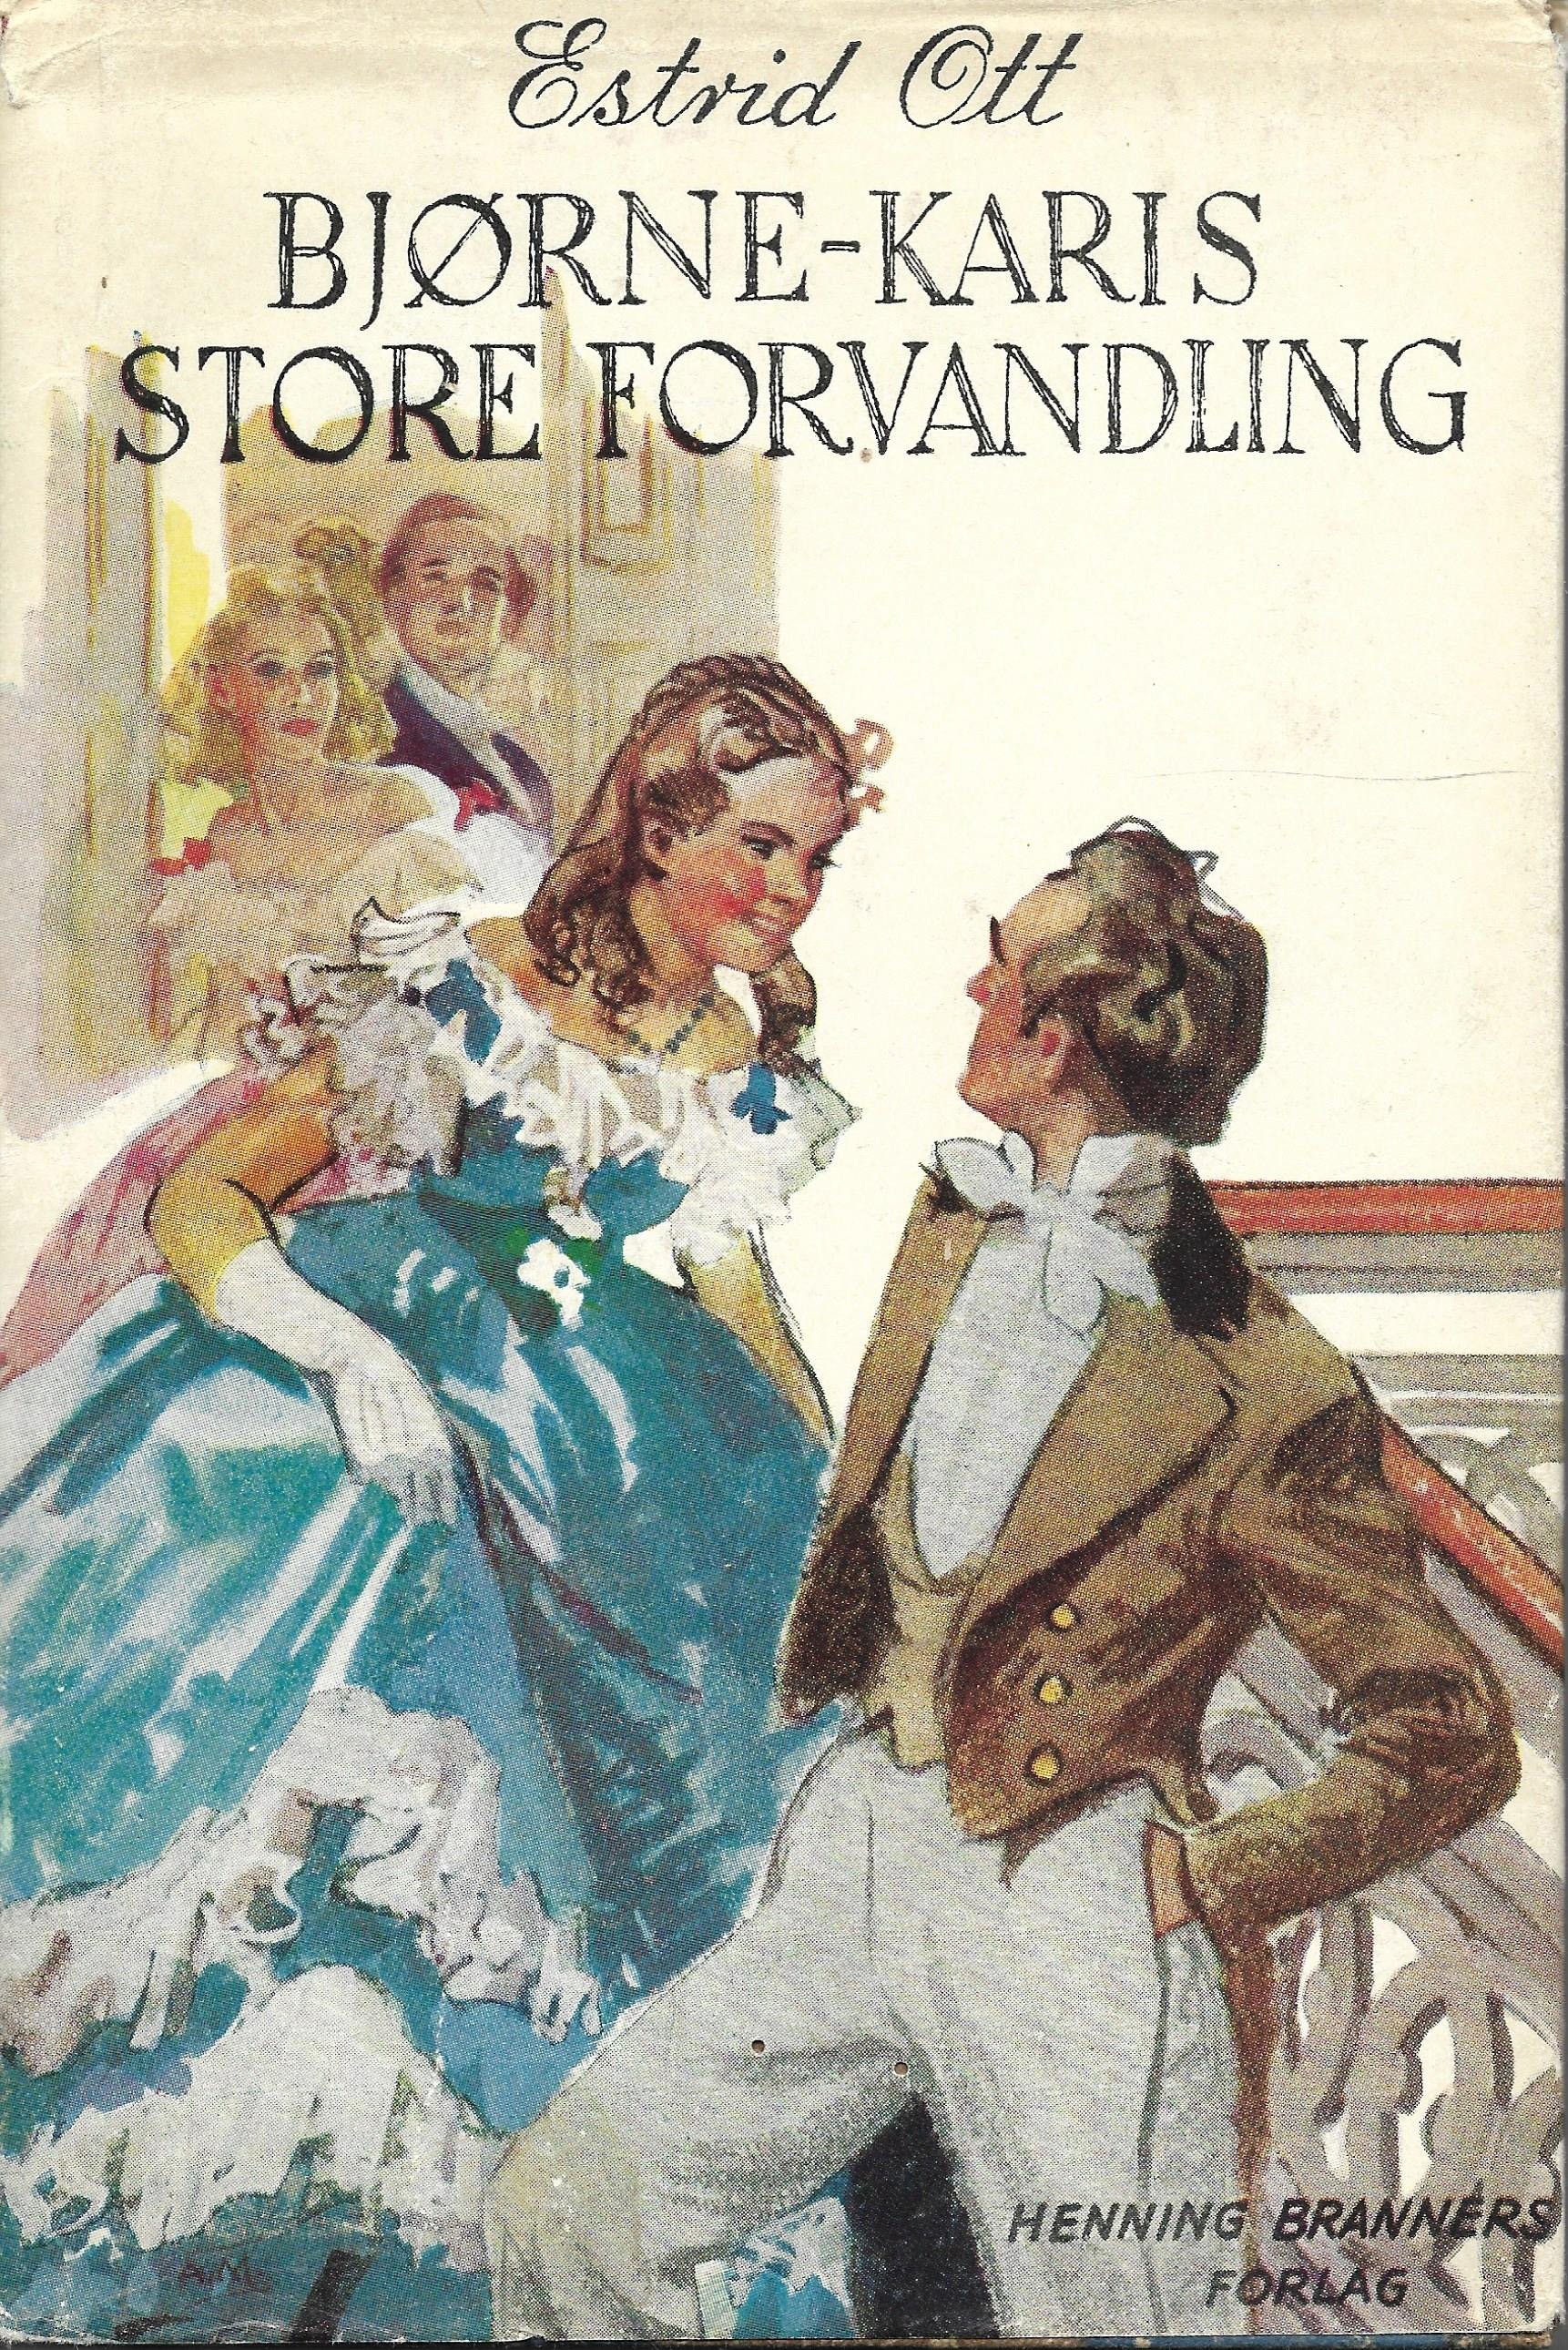 Bjørne-Karis store forvandling  - Estrid Ott 1950-1